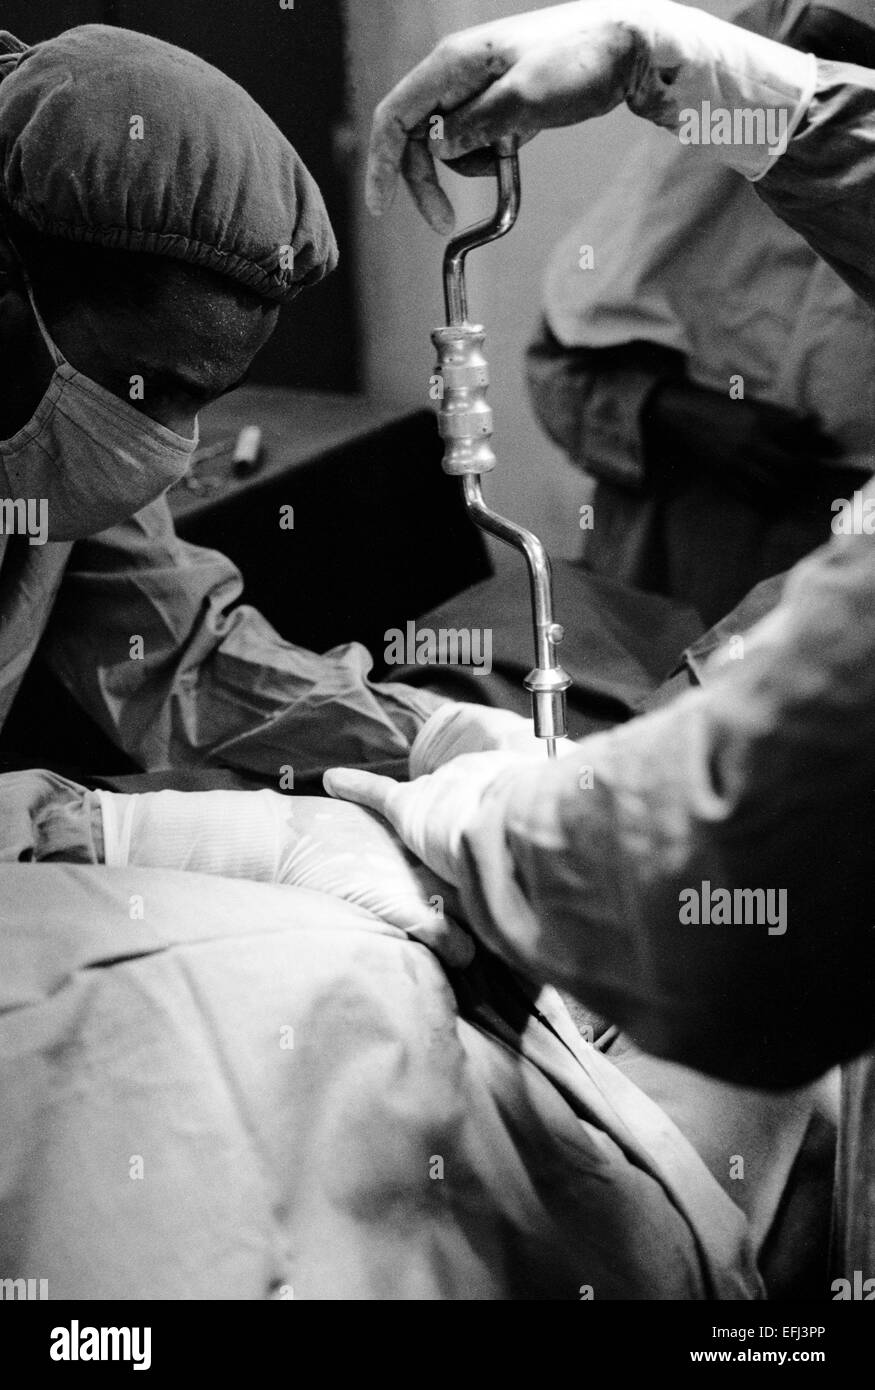 Team of Doctors from MSF treat patient in Kismayo Somalia 1994 Stock Photo